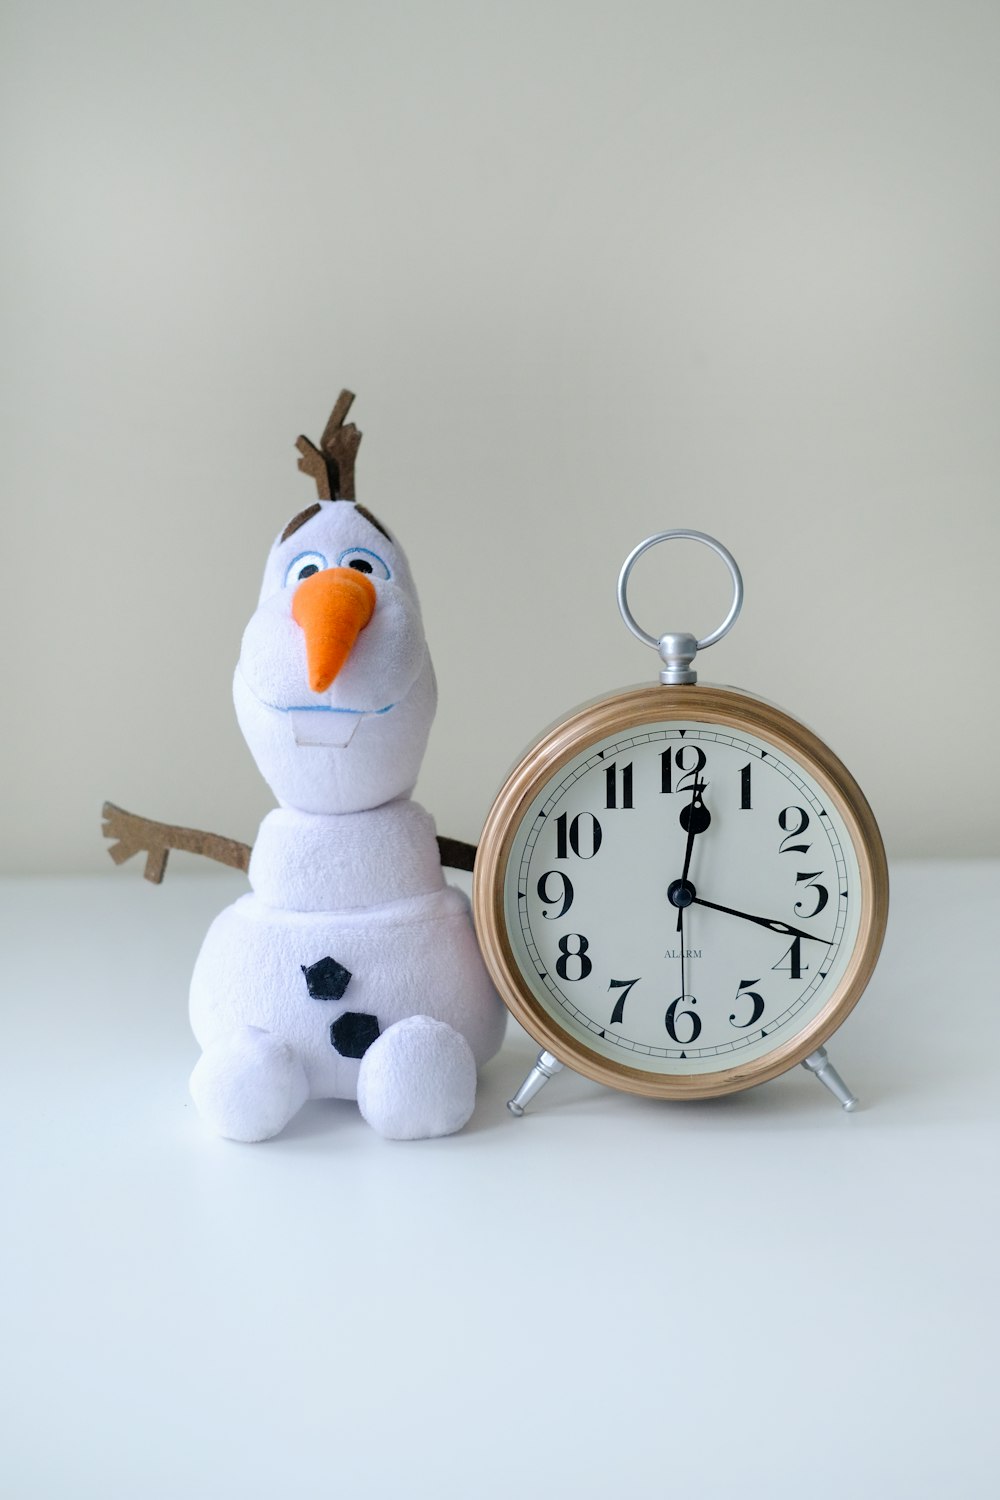 a snowman sitting next to an alarm clock